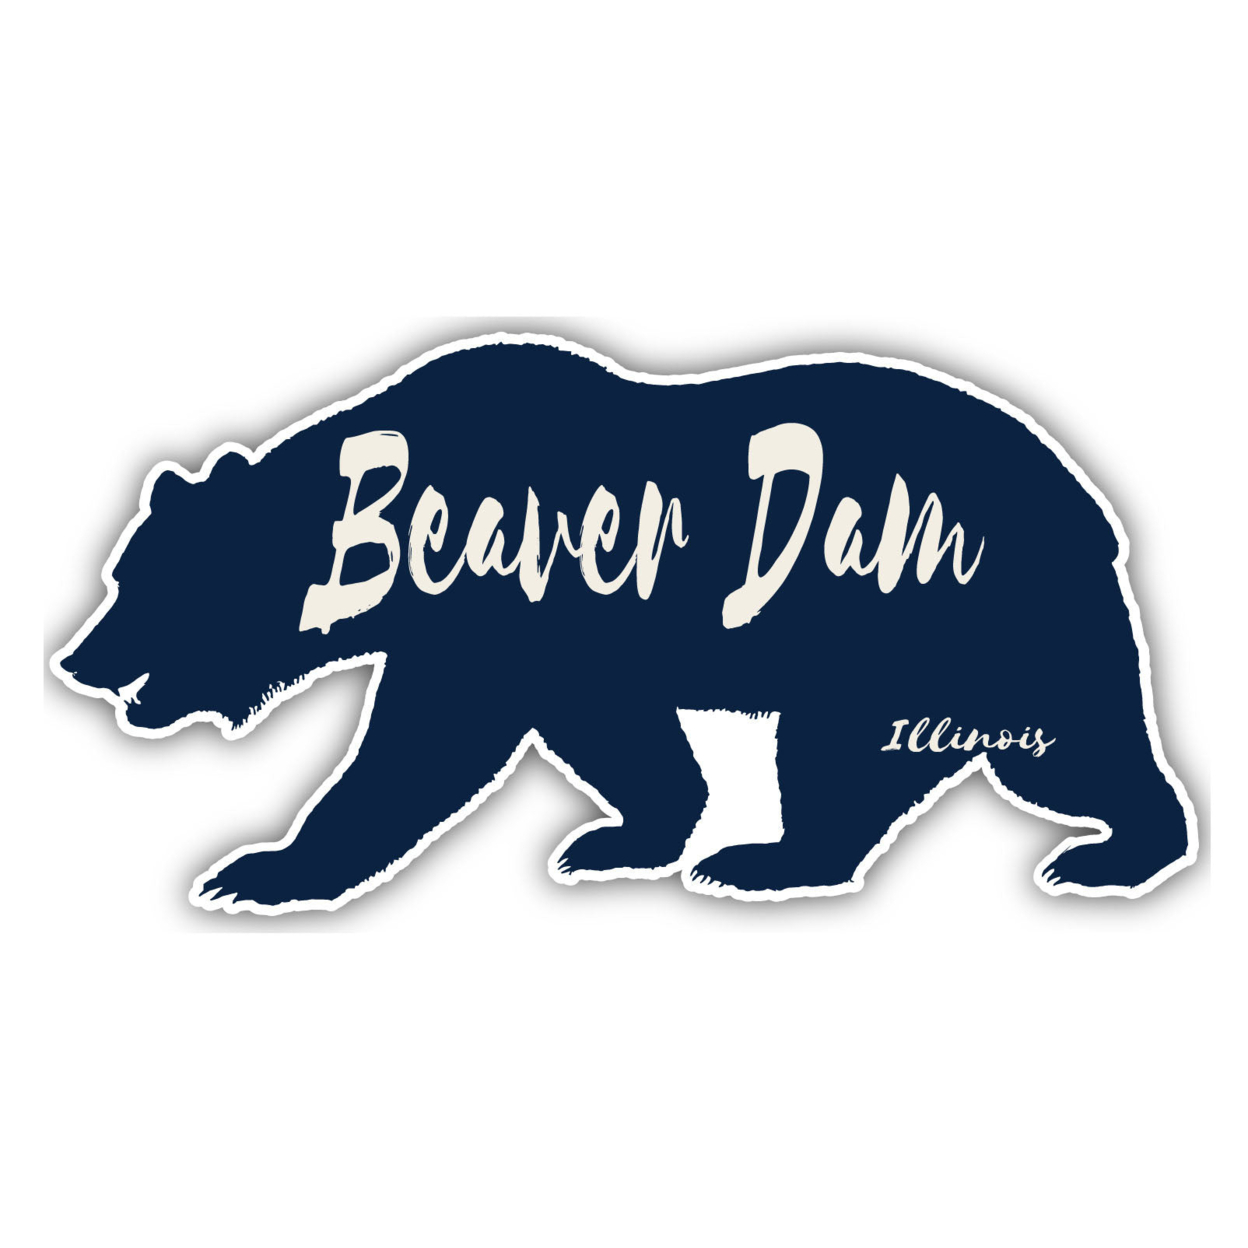 Beaver Dam Illinois Souvenir Decorative Stickers (Choose Theme And Size) - 4-Pack, 12-Inch, Bear